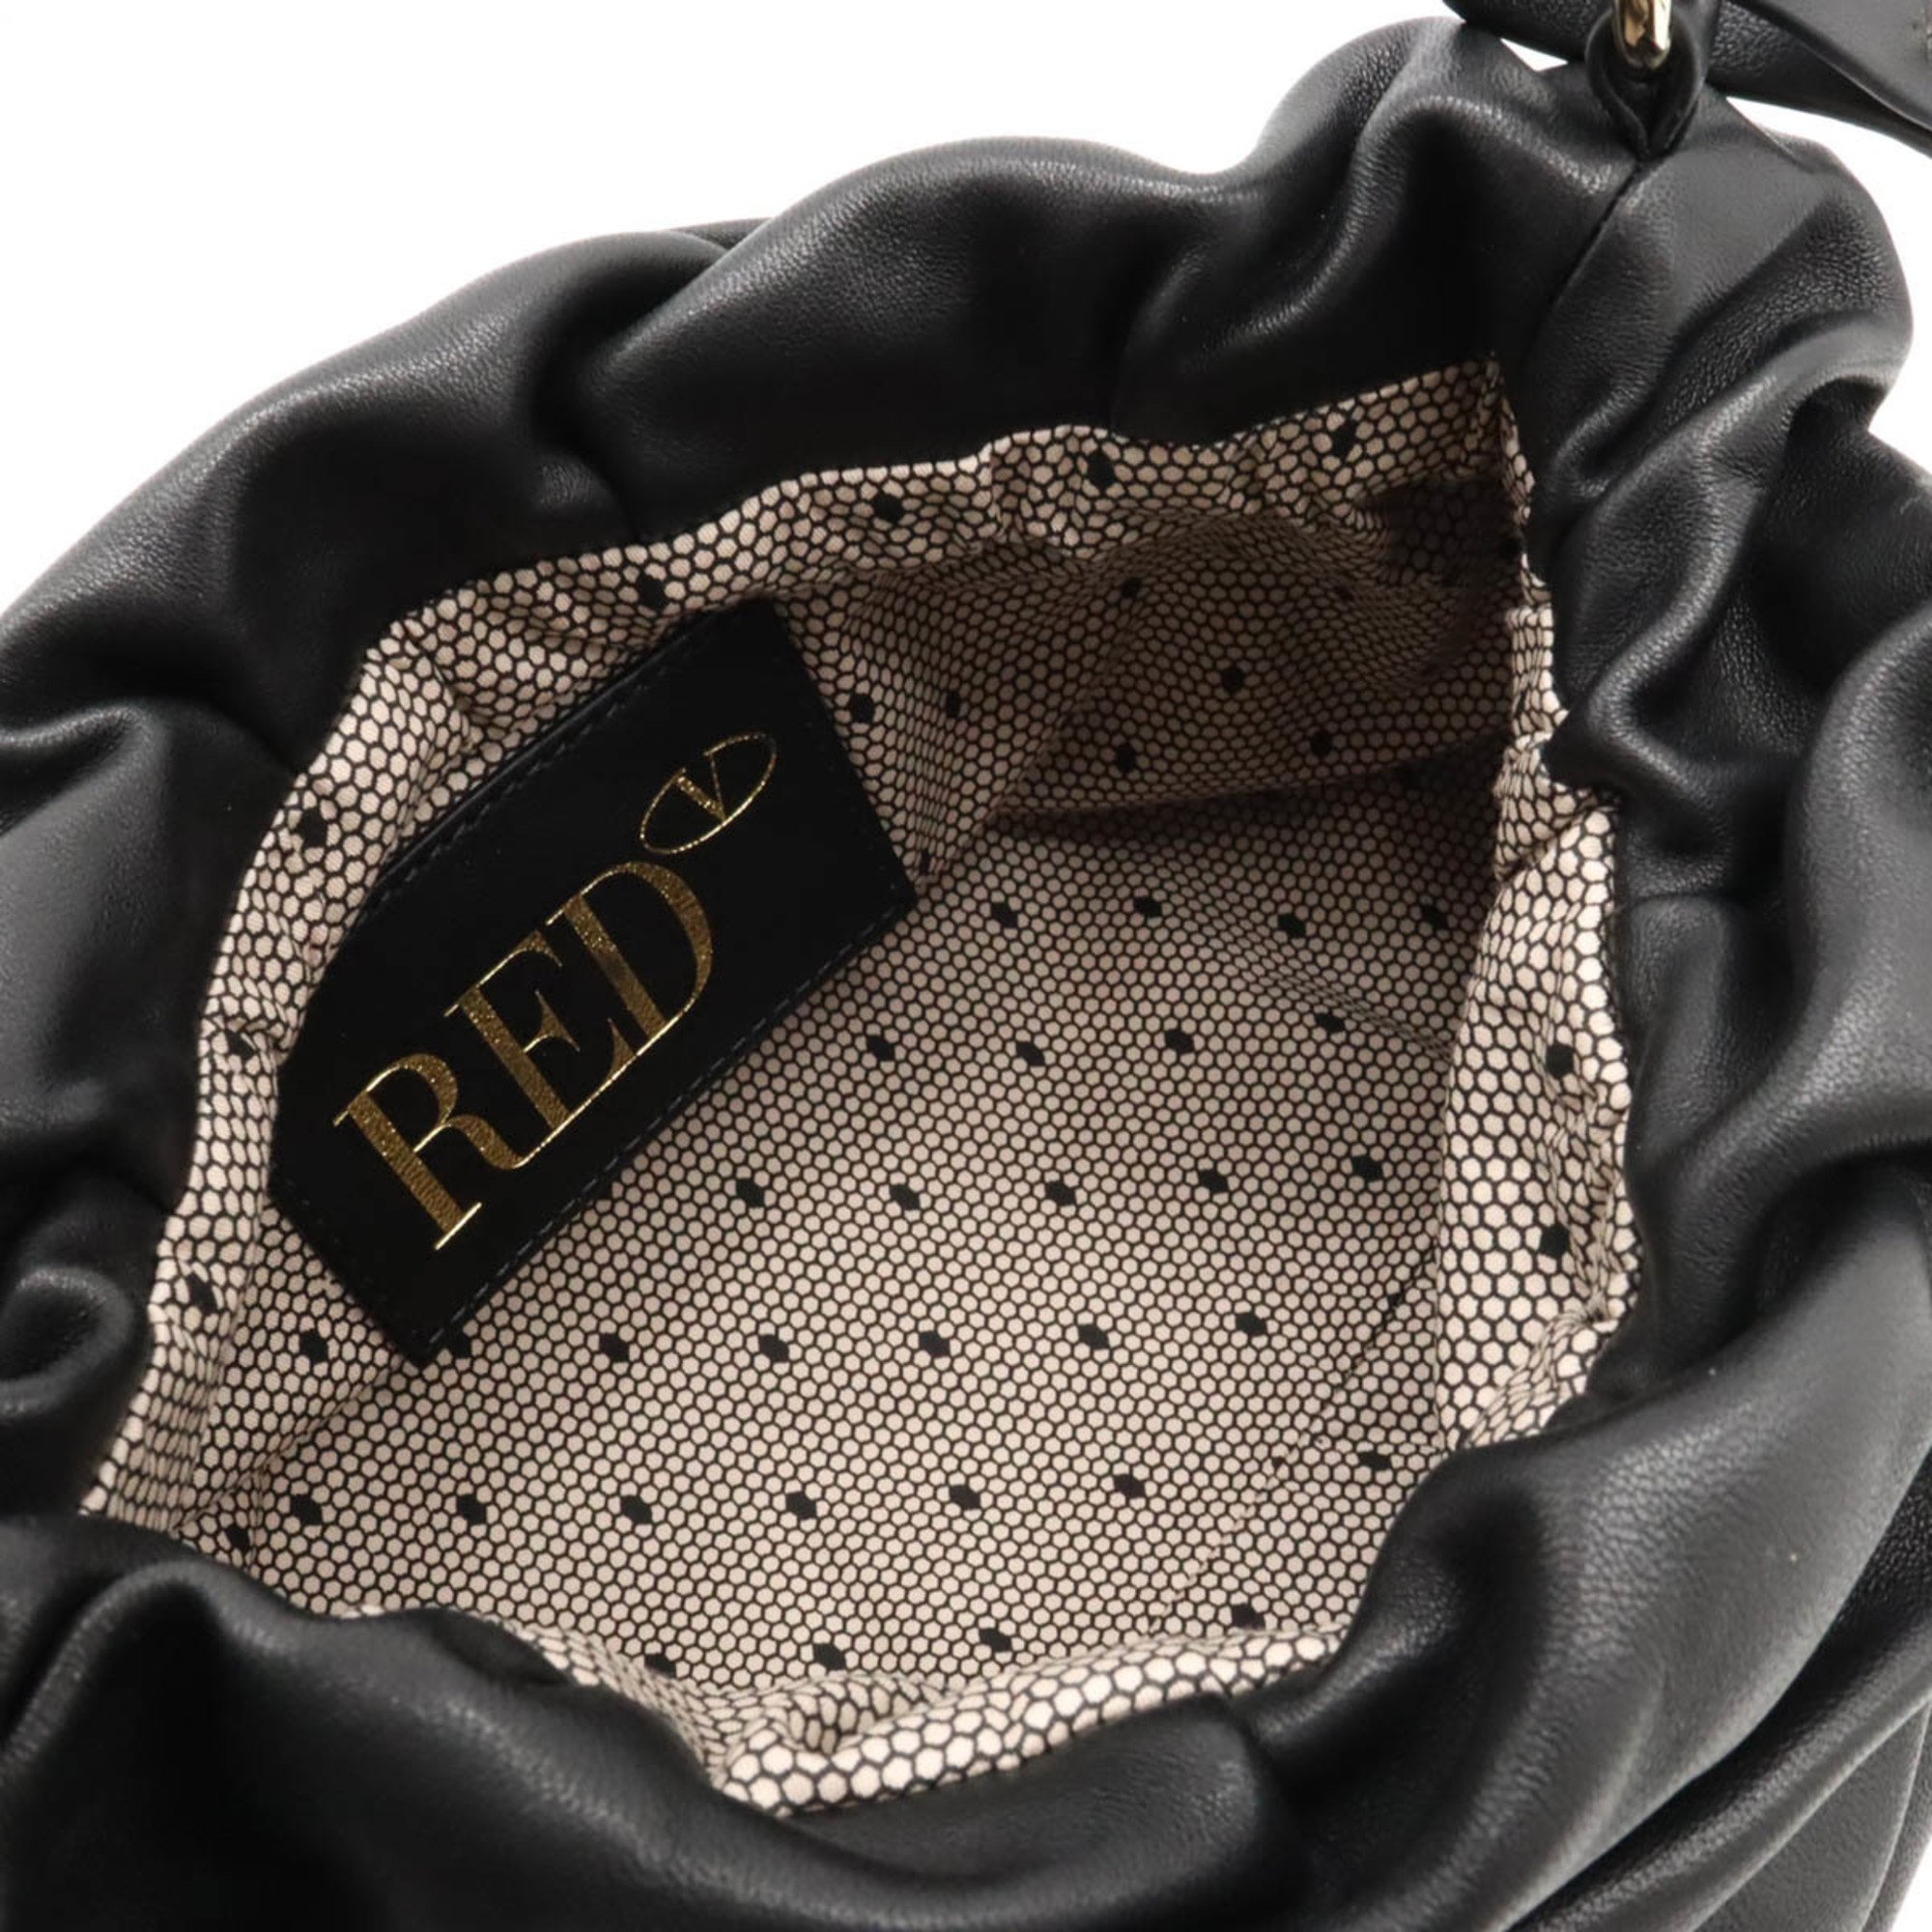 REDValentino RED VALENTINO Red Valentino Shoulder Bag Handbag Nappa Leather Black XQ2B0D09